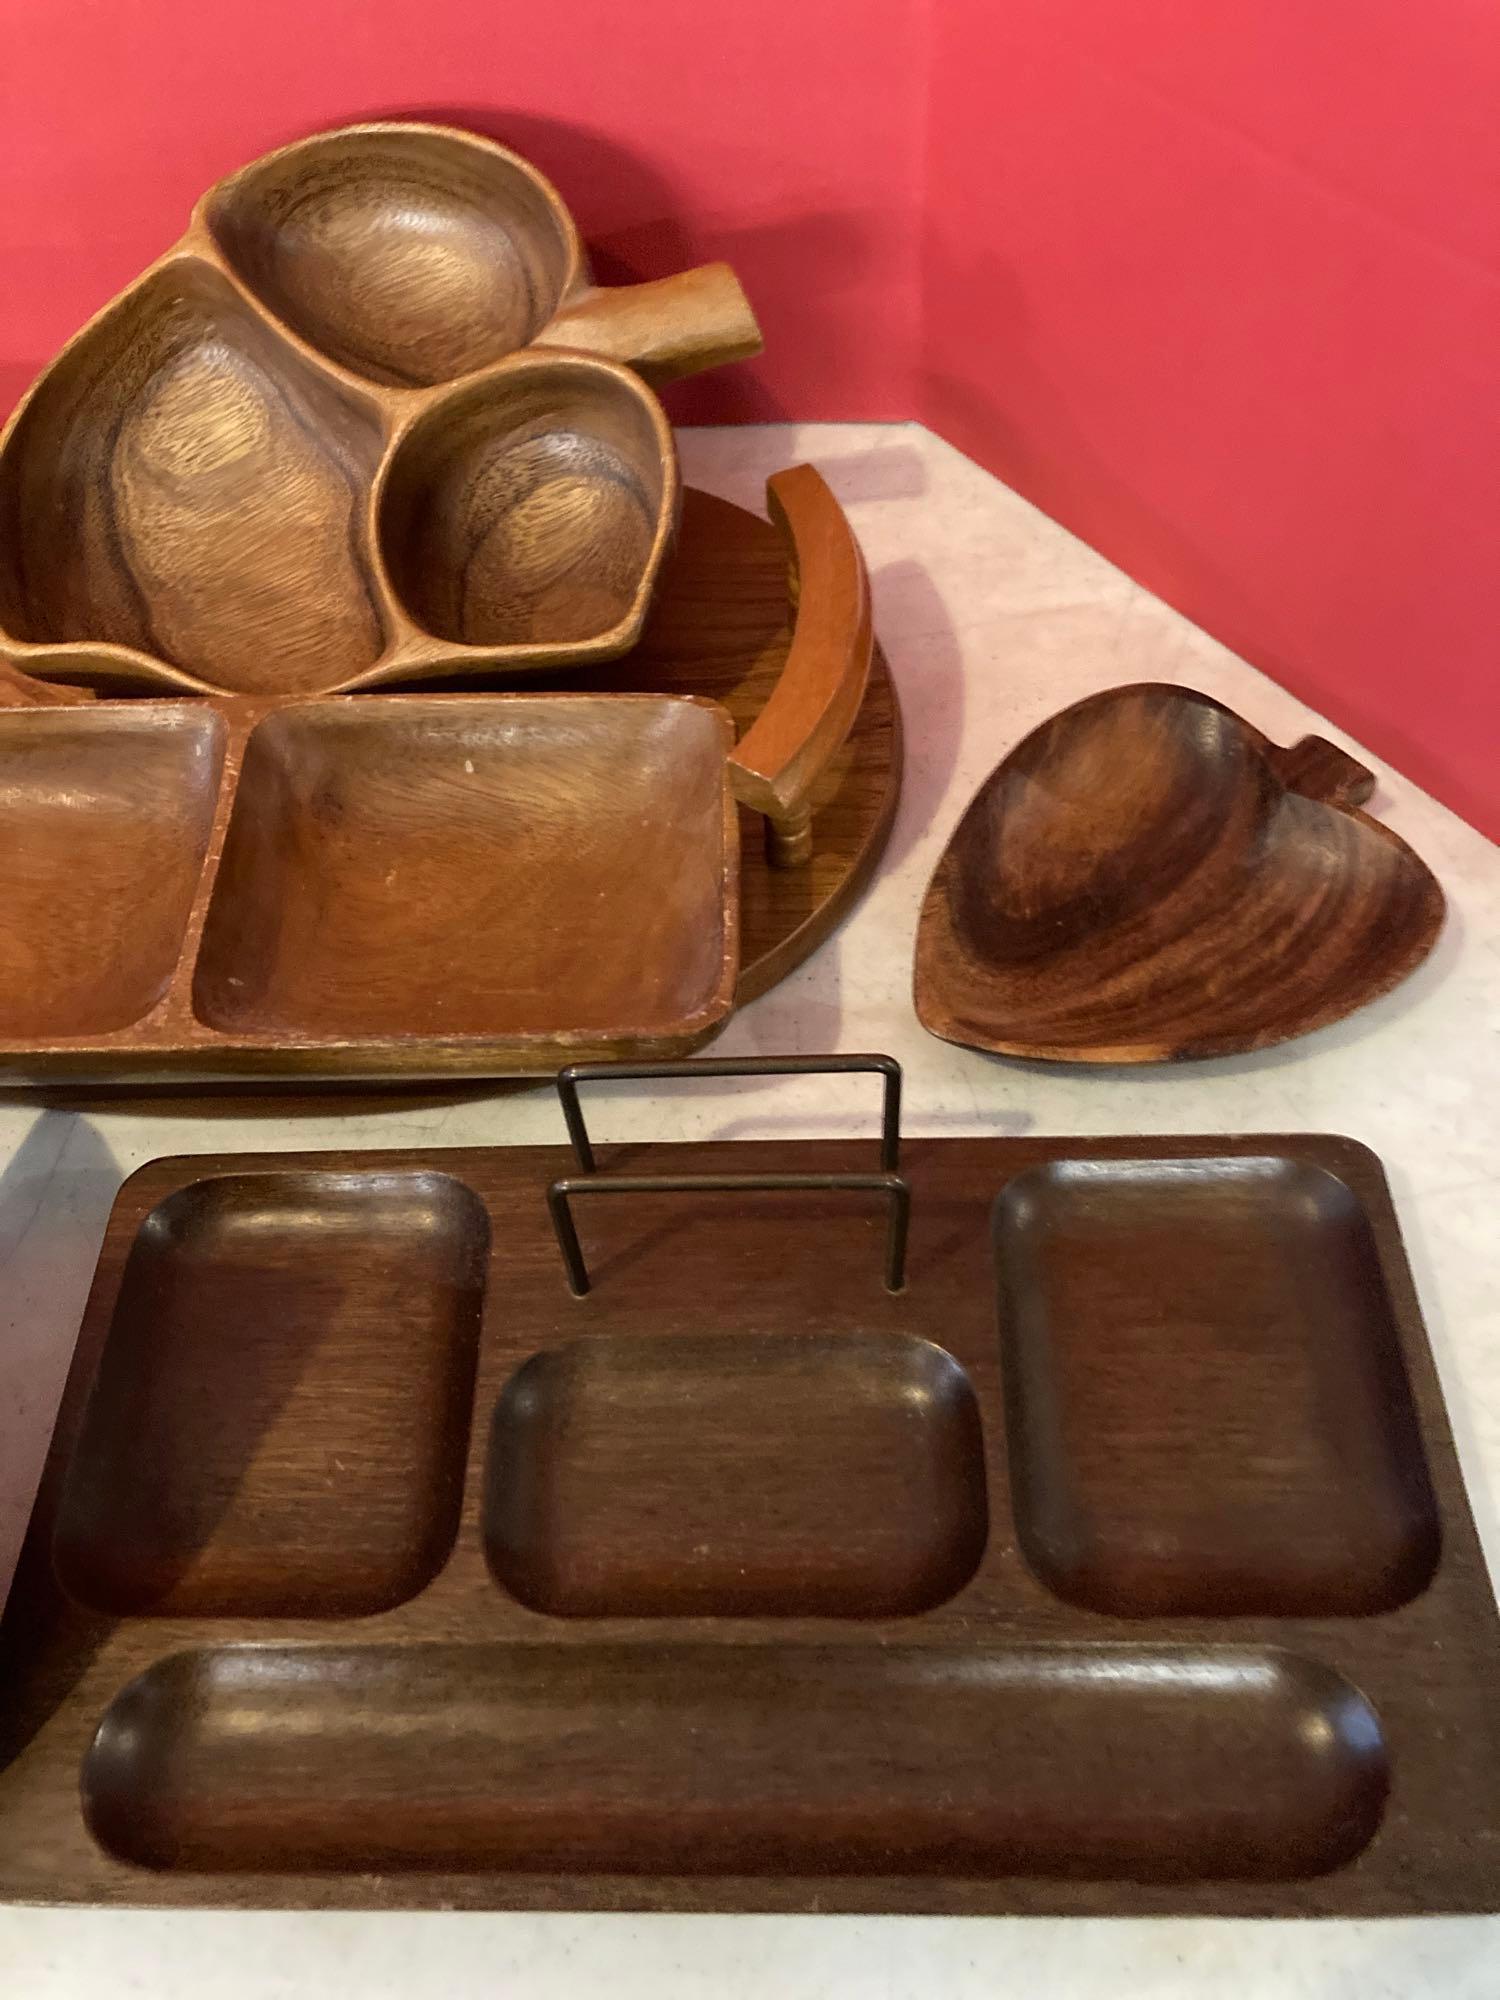 Wood and teak items